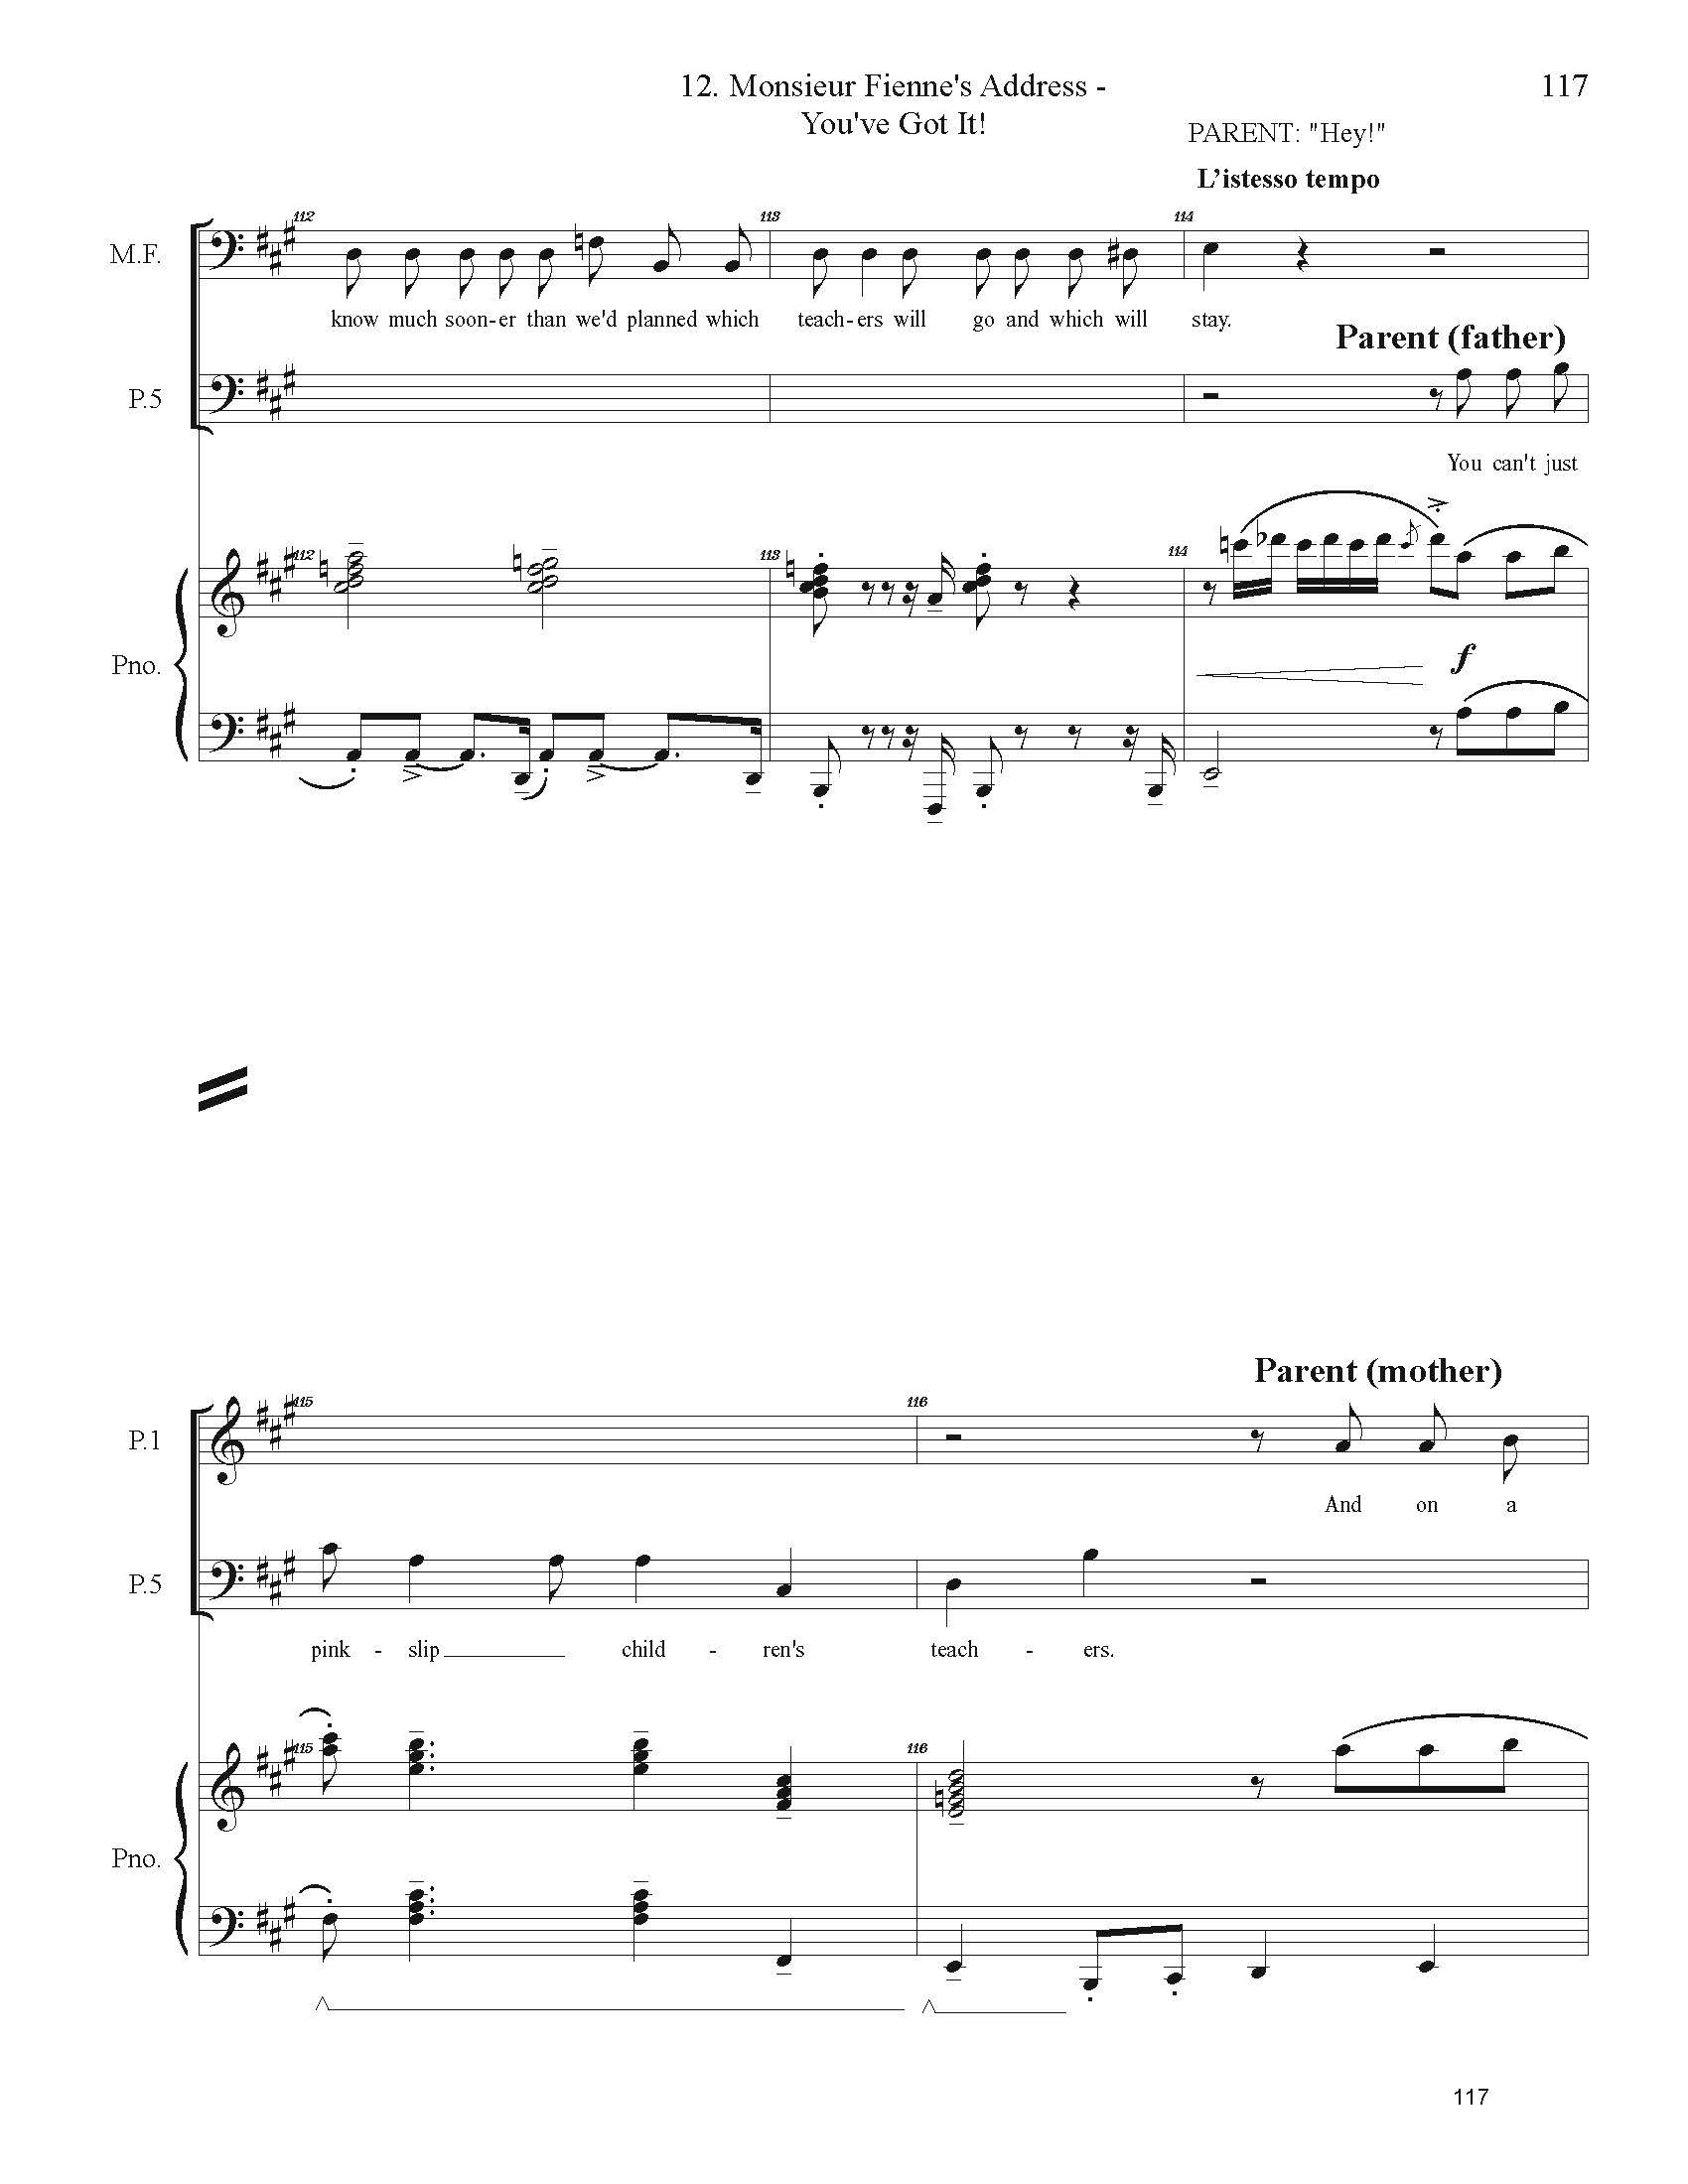 FULL PIANO VOCAL SCORE DRAFT 1 - Score_Page_117.jpg